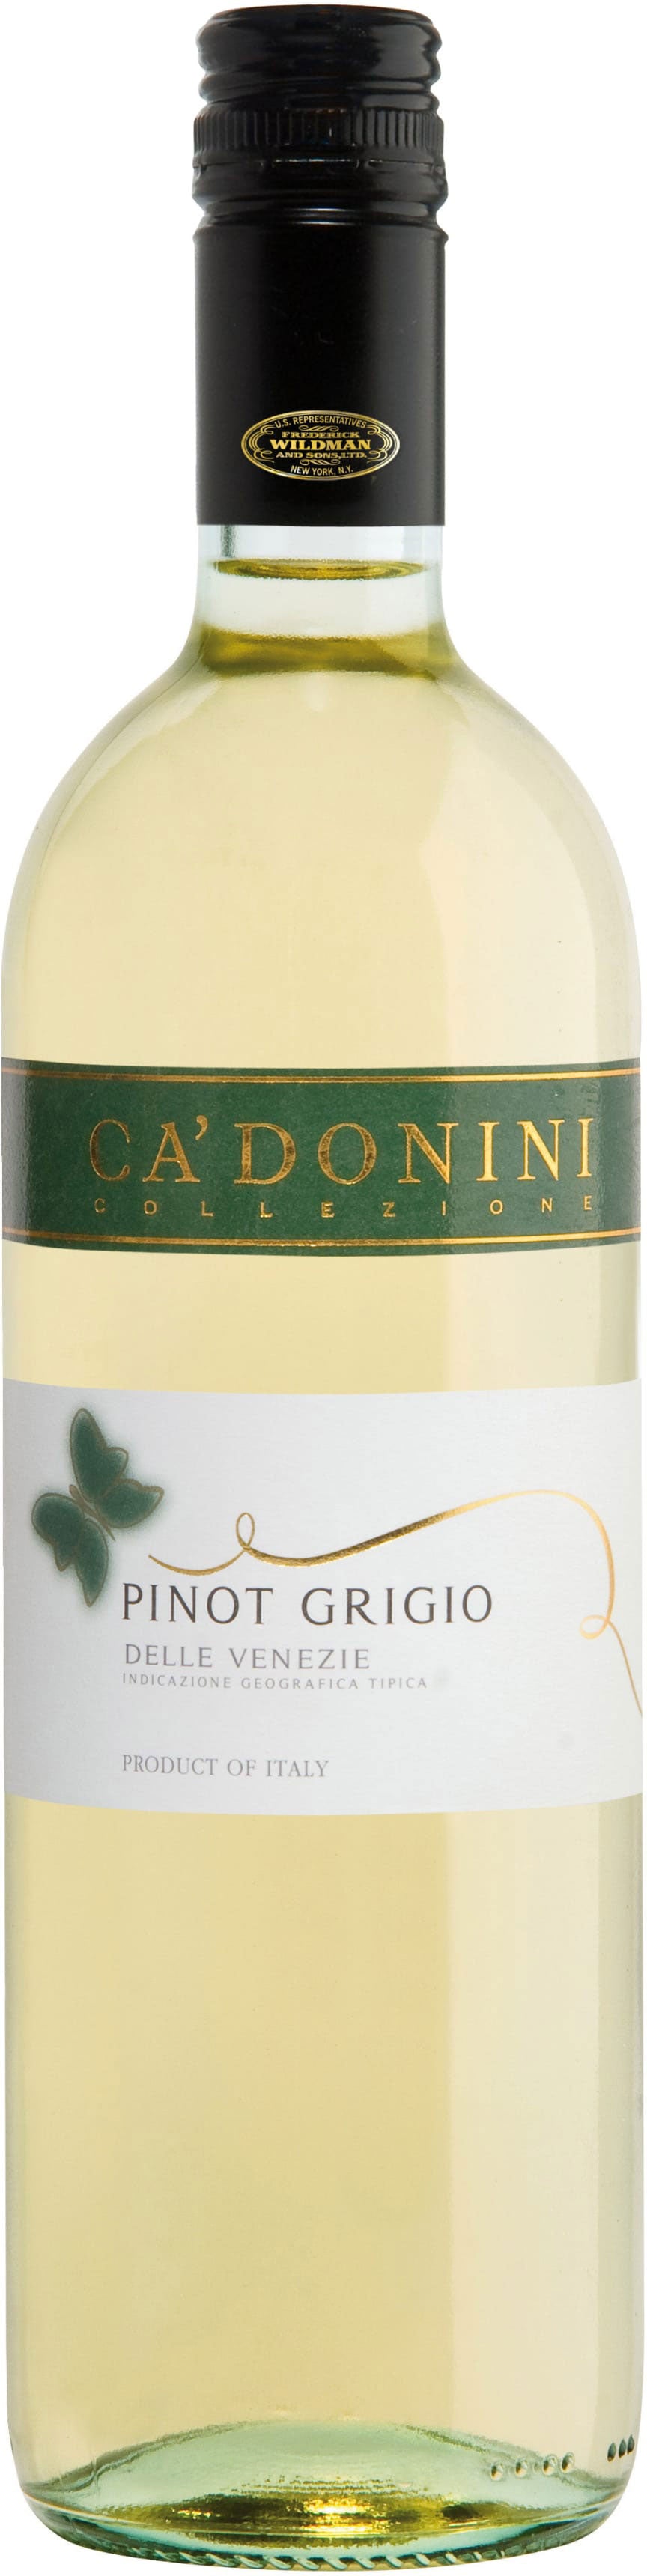 Donini Pinot Grigio 2019